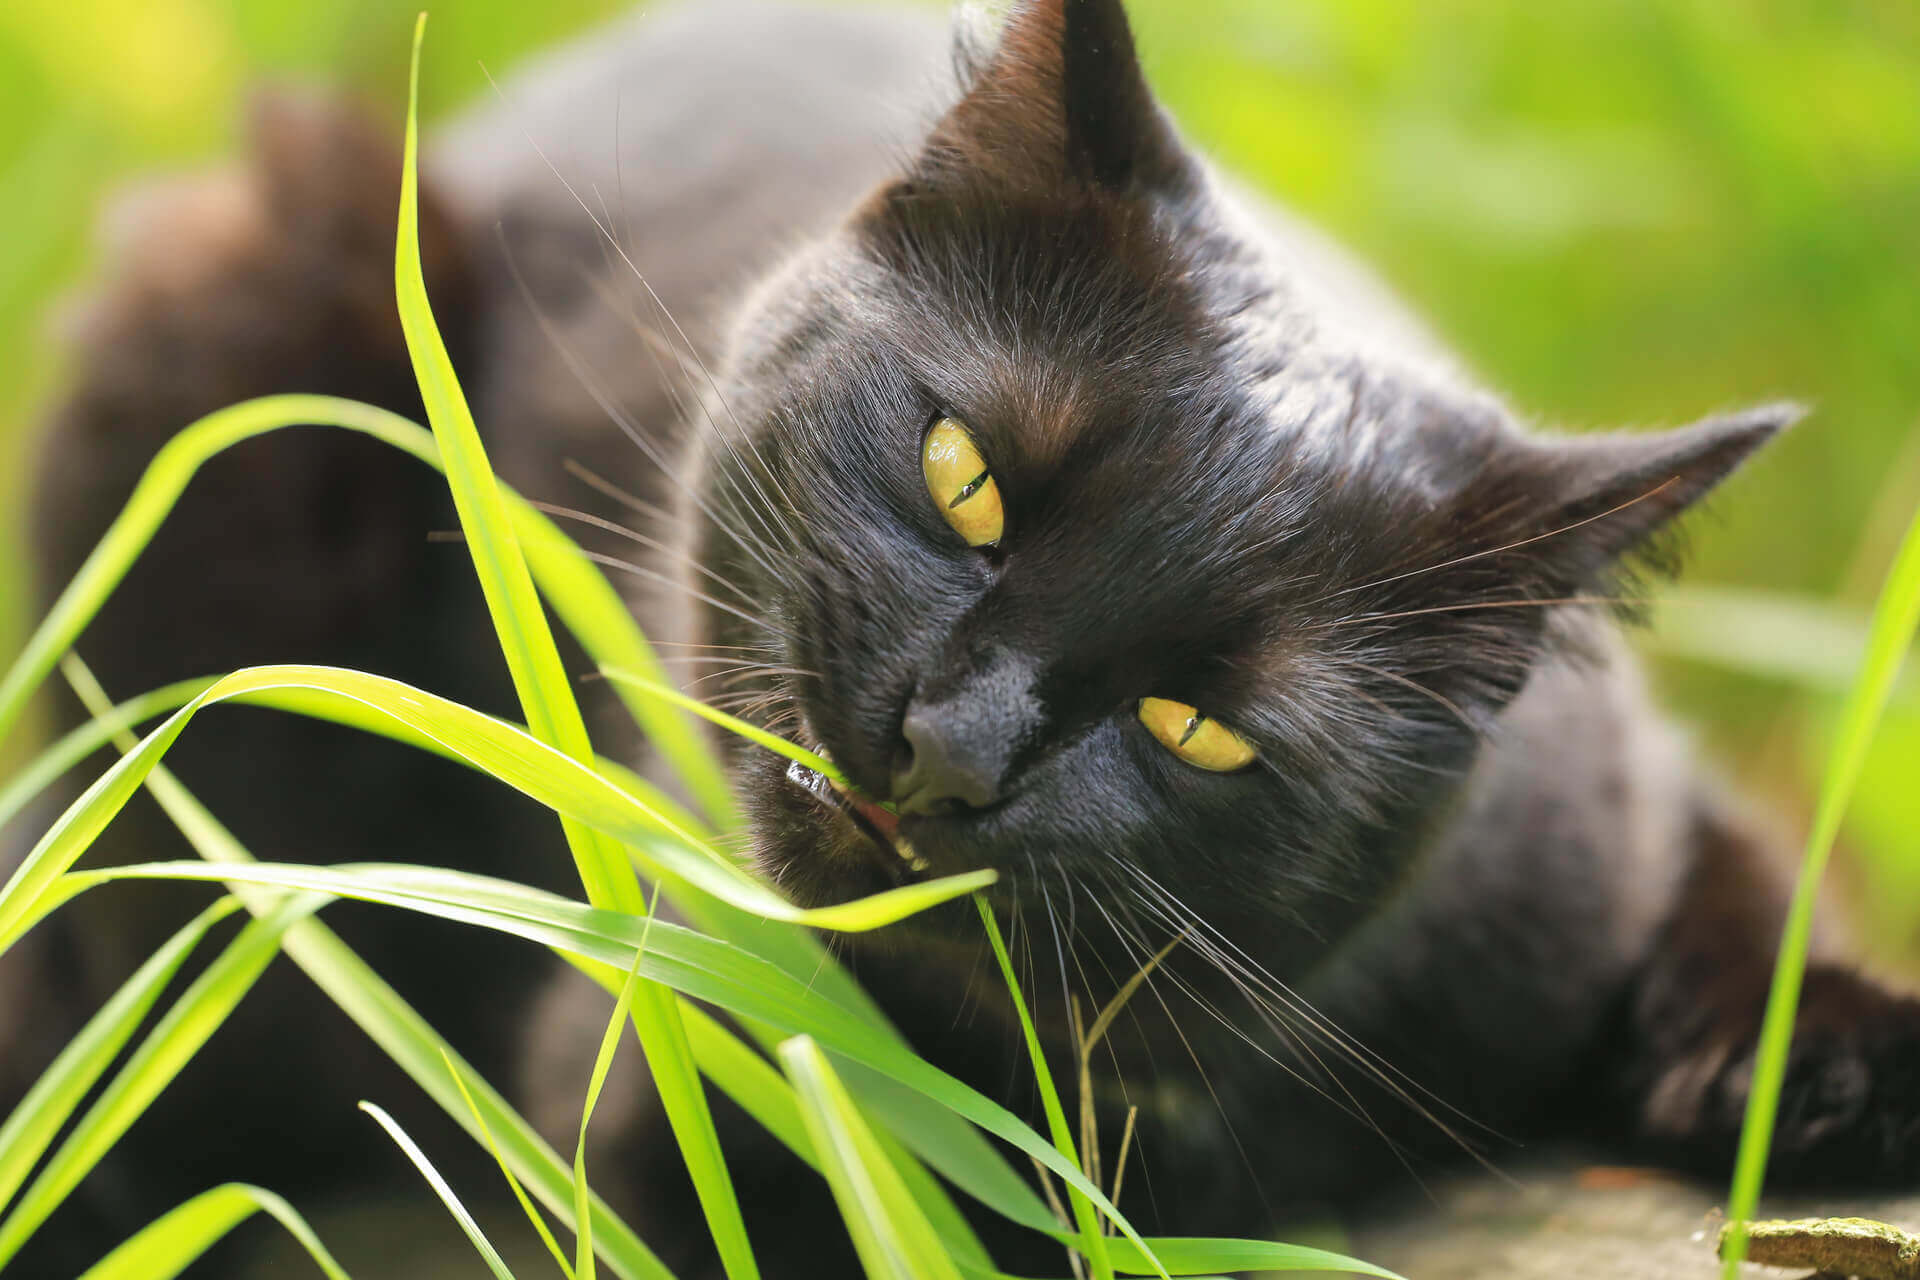 black cat eating grass